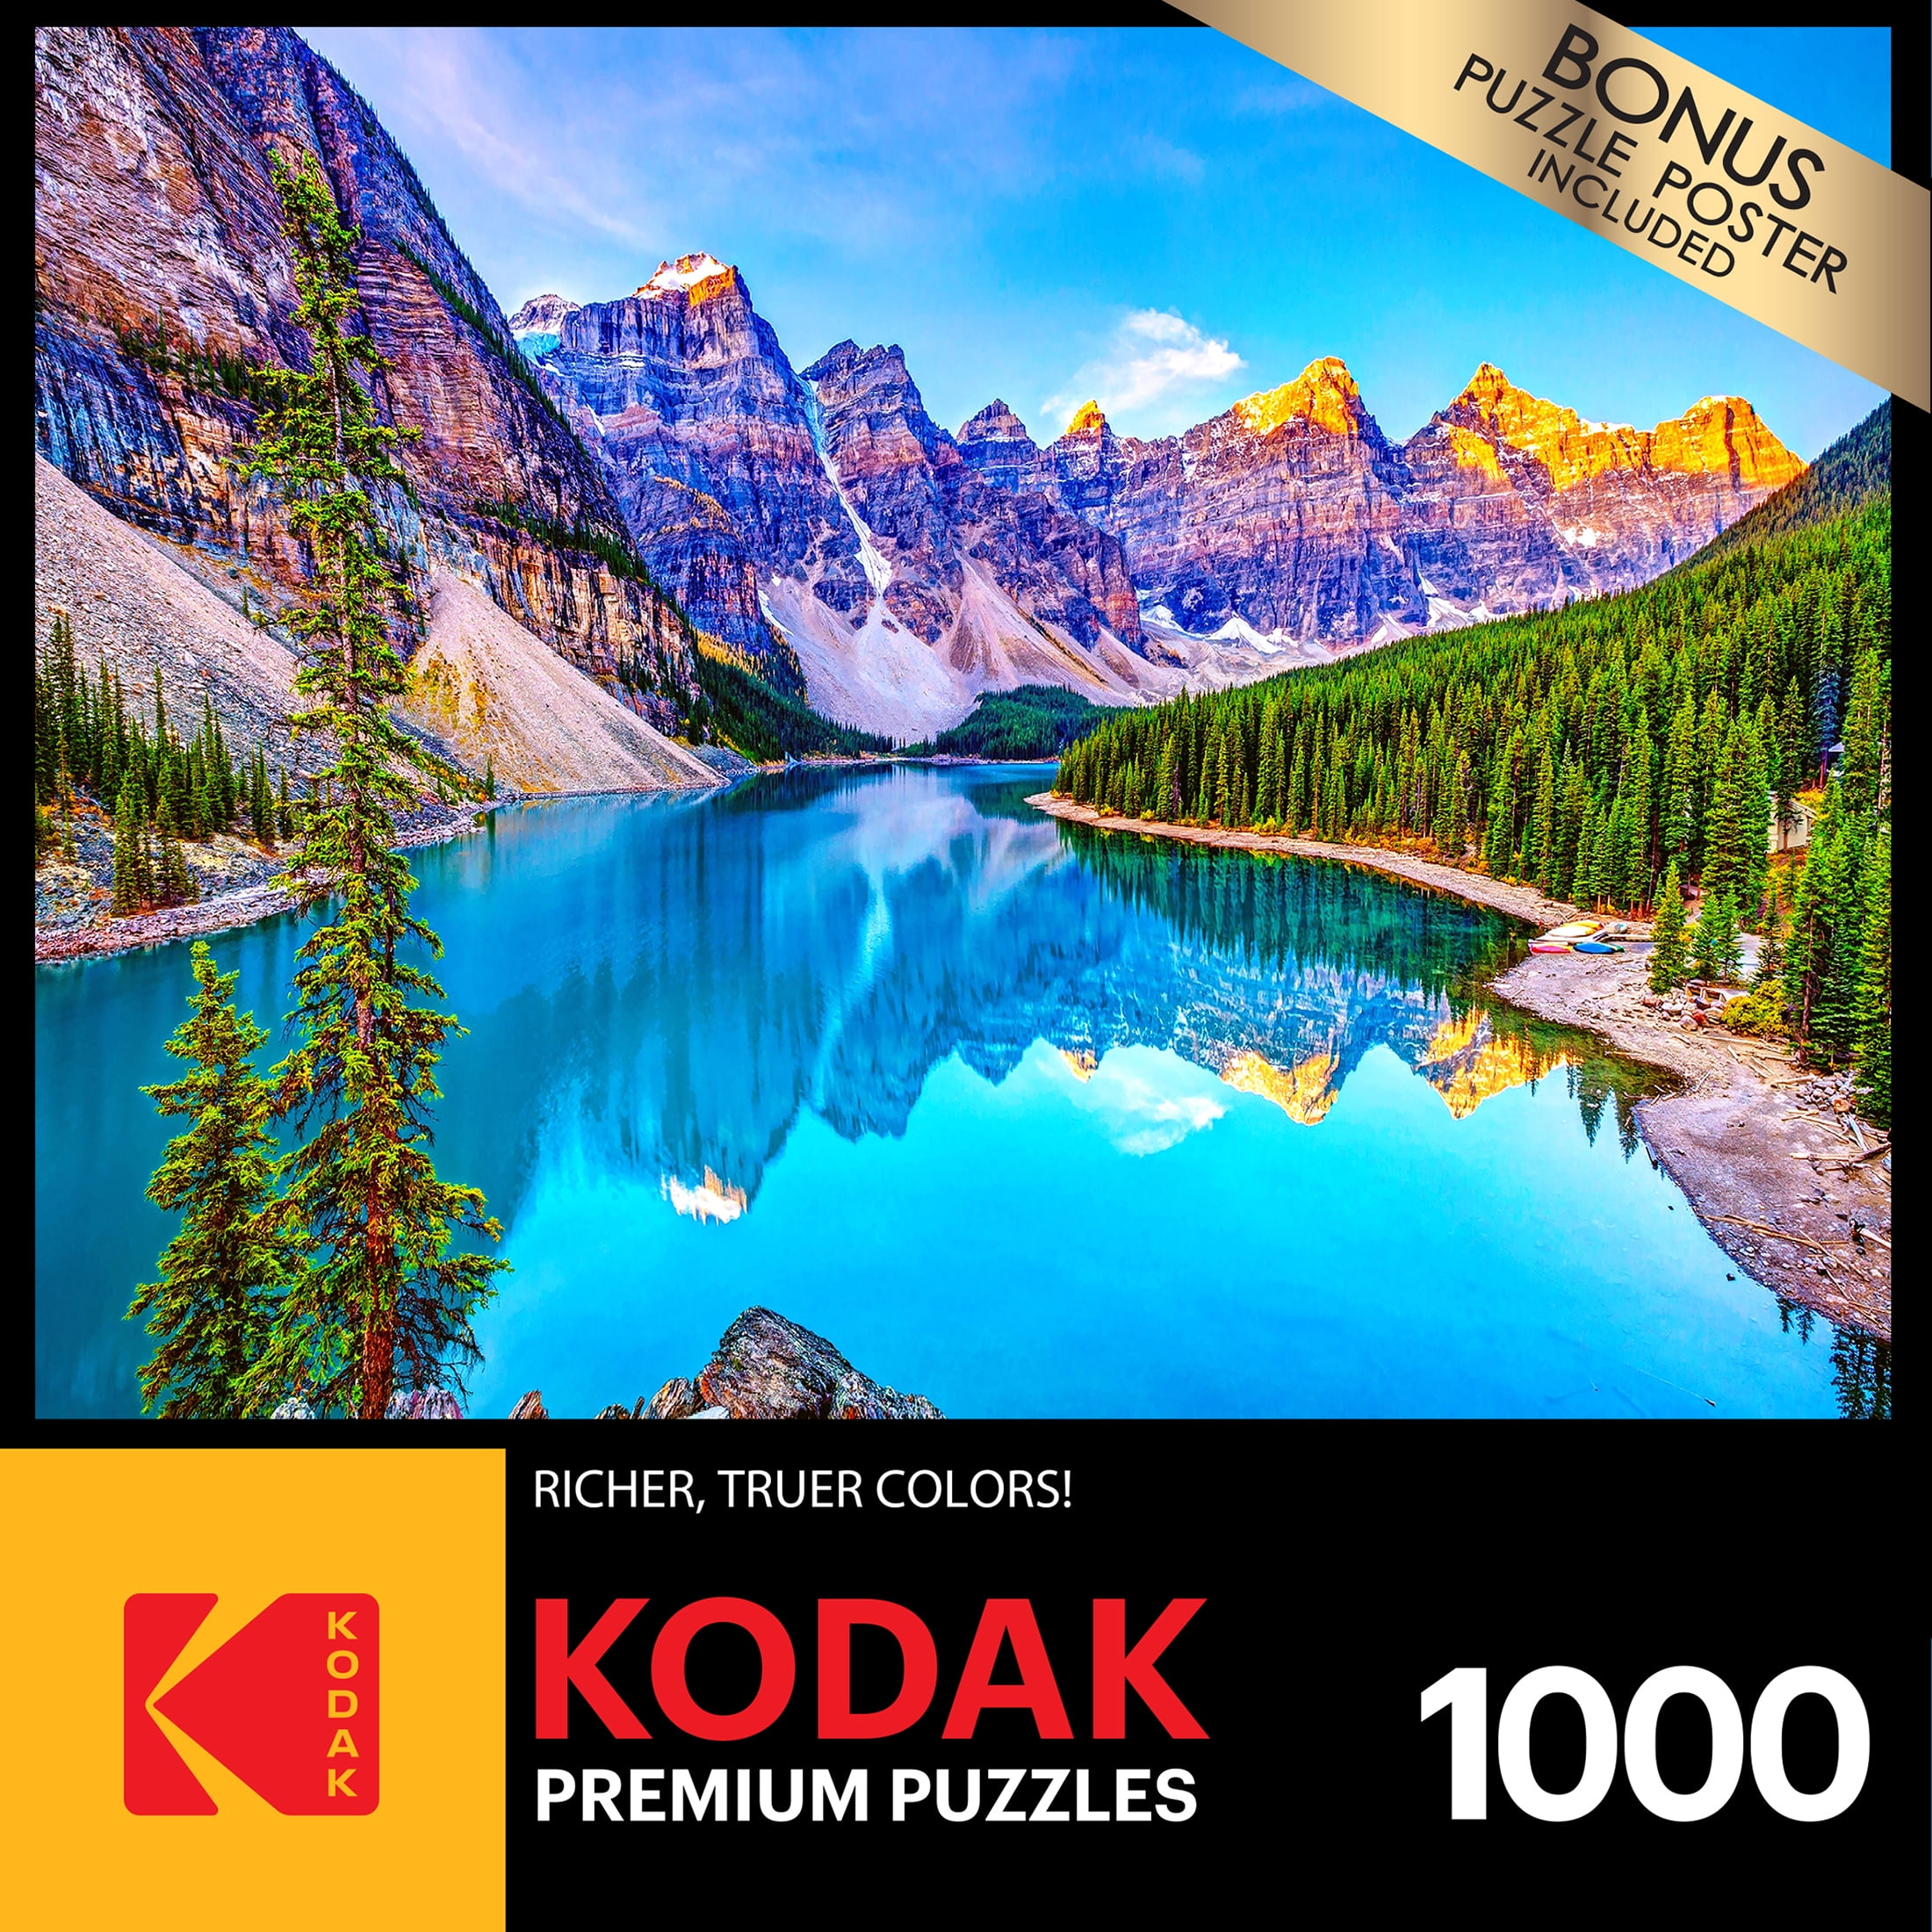 Puzzle 5000 pieces lac alpin, puzzle